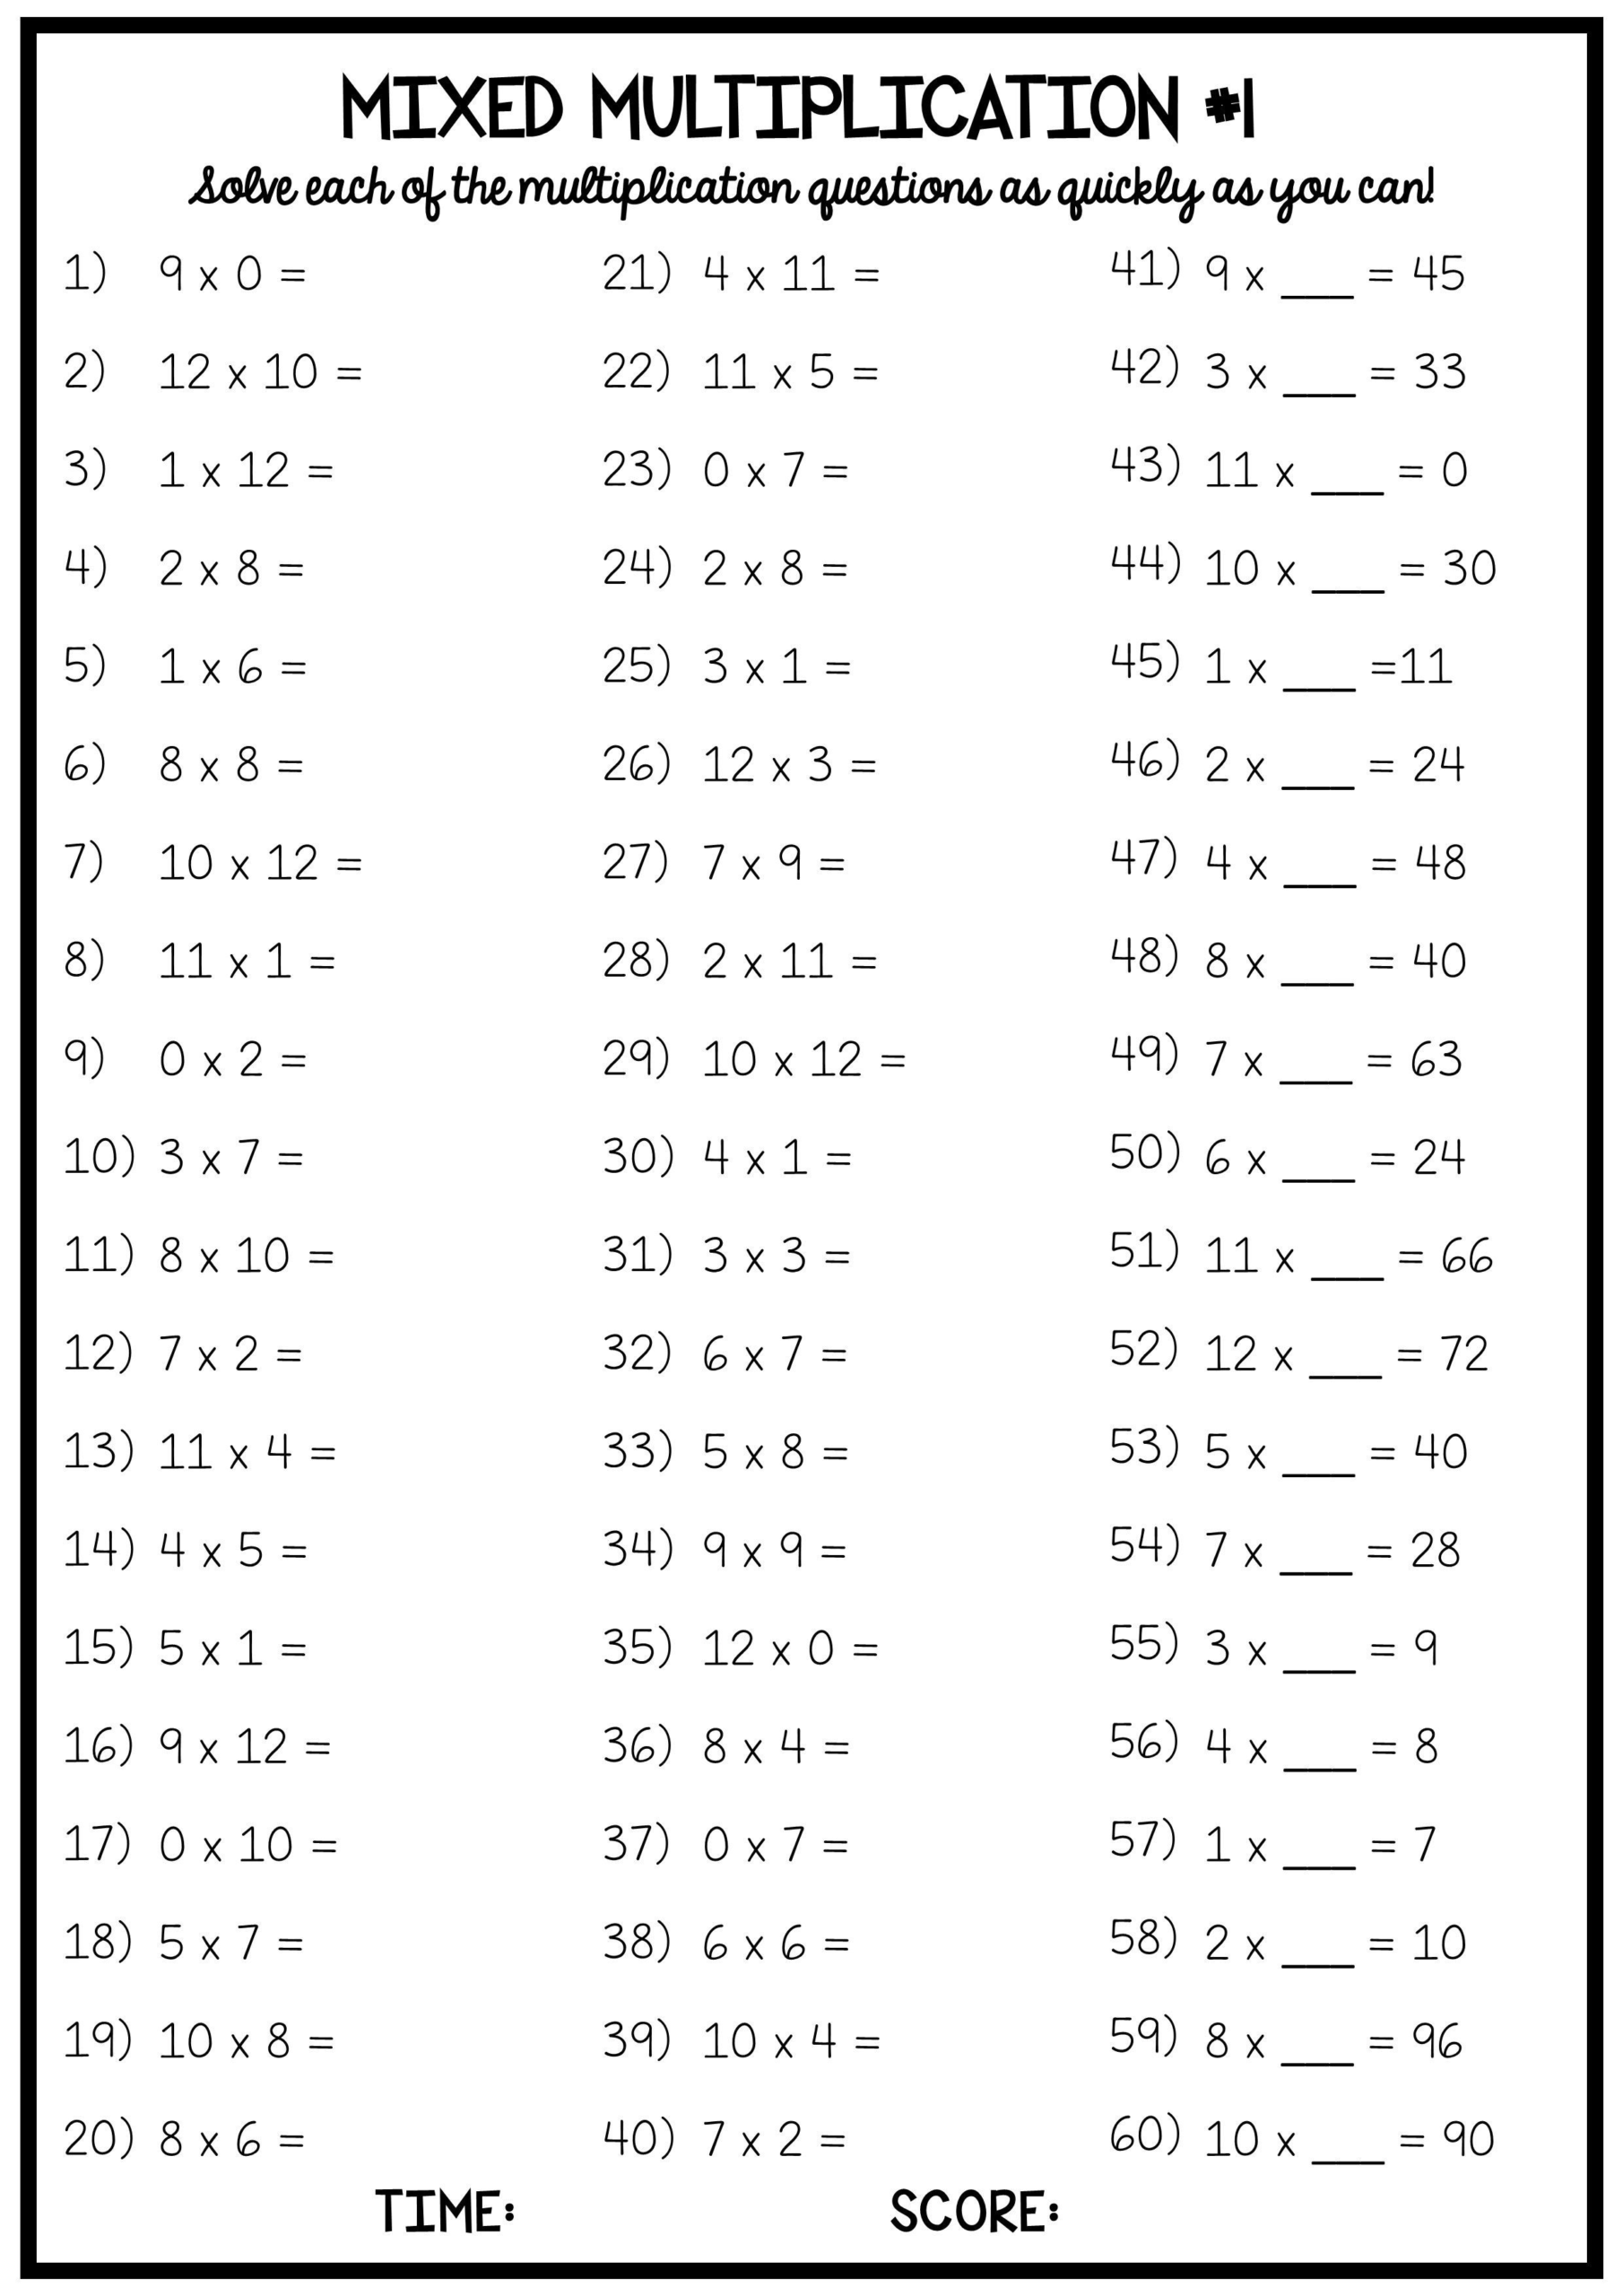  Multiplication Worksheets 4S PrintableMultiplication